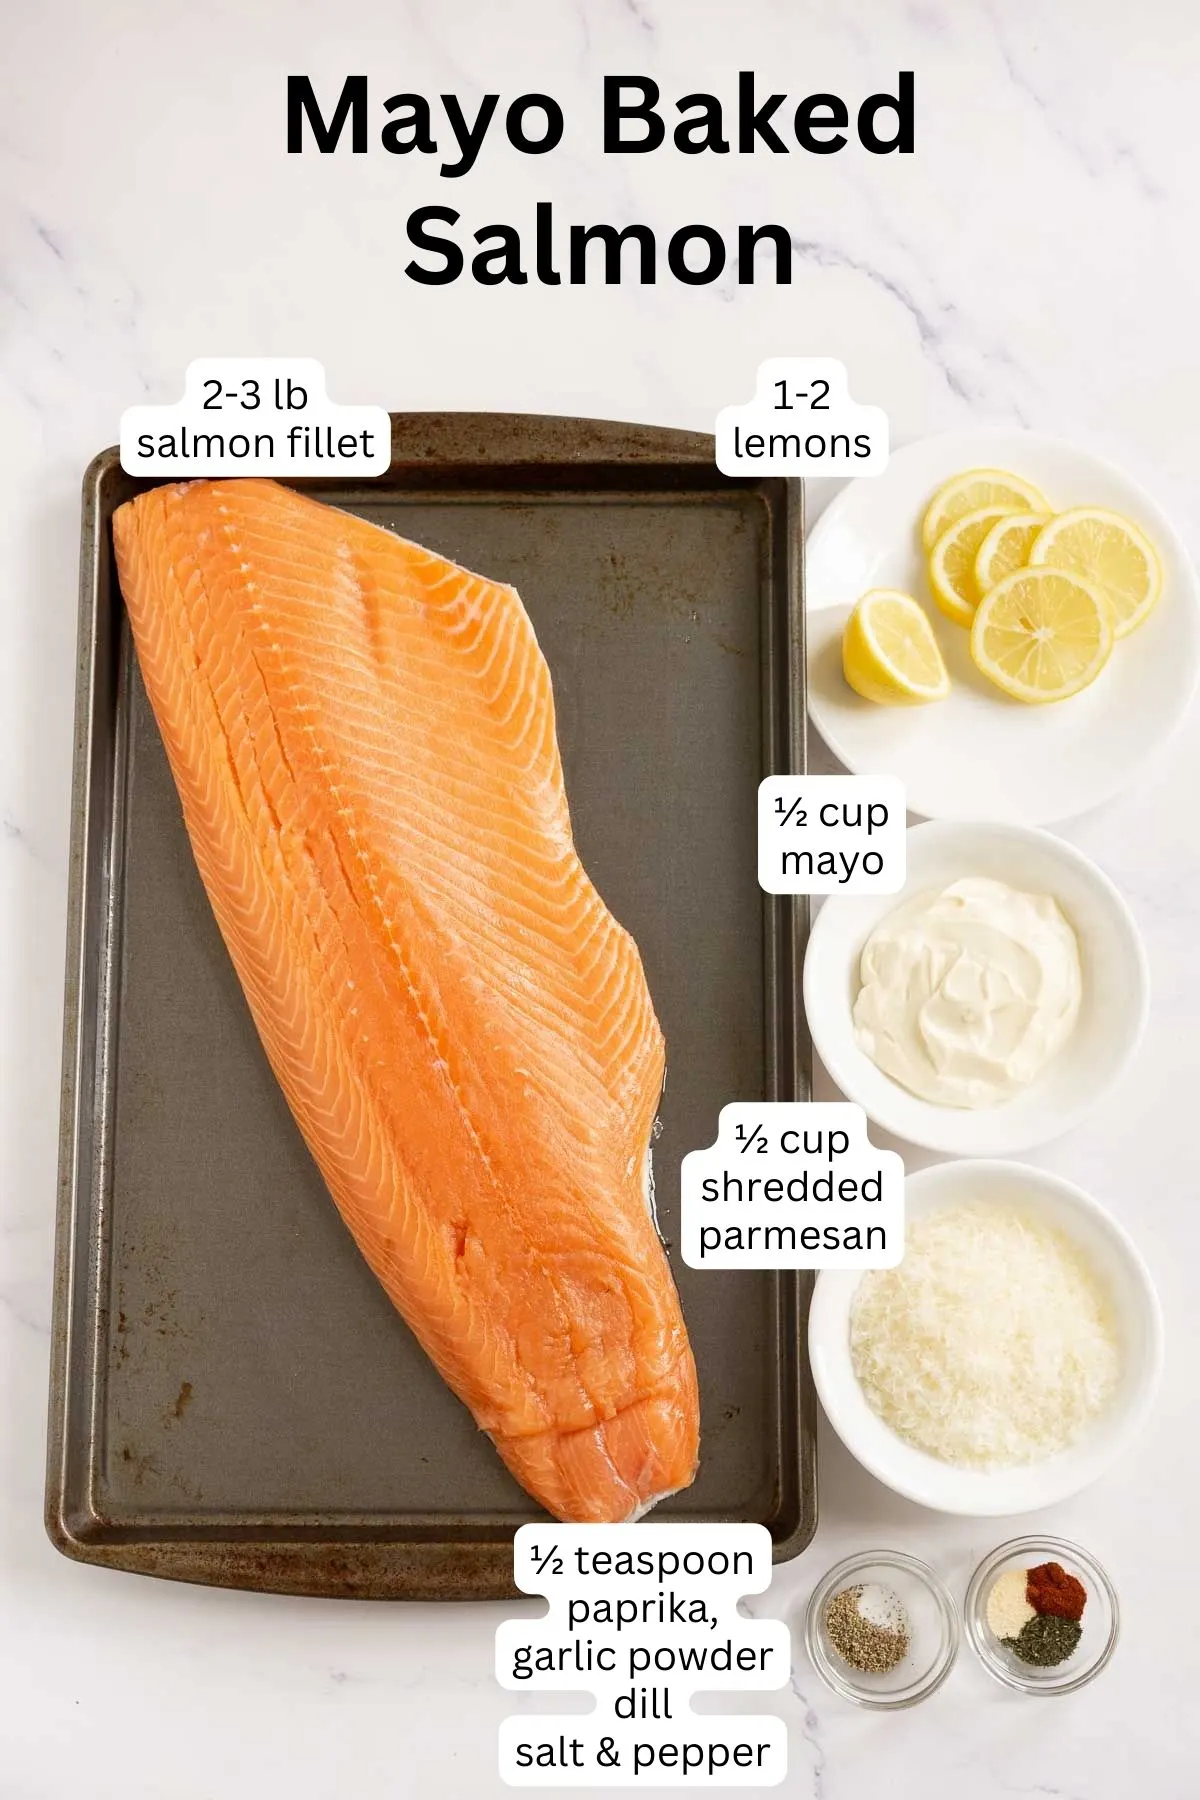 Ingredients to make mayo crusted salmon